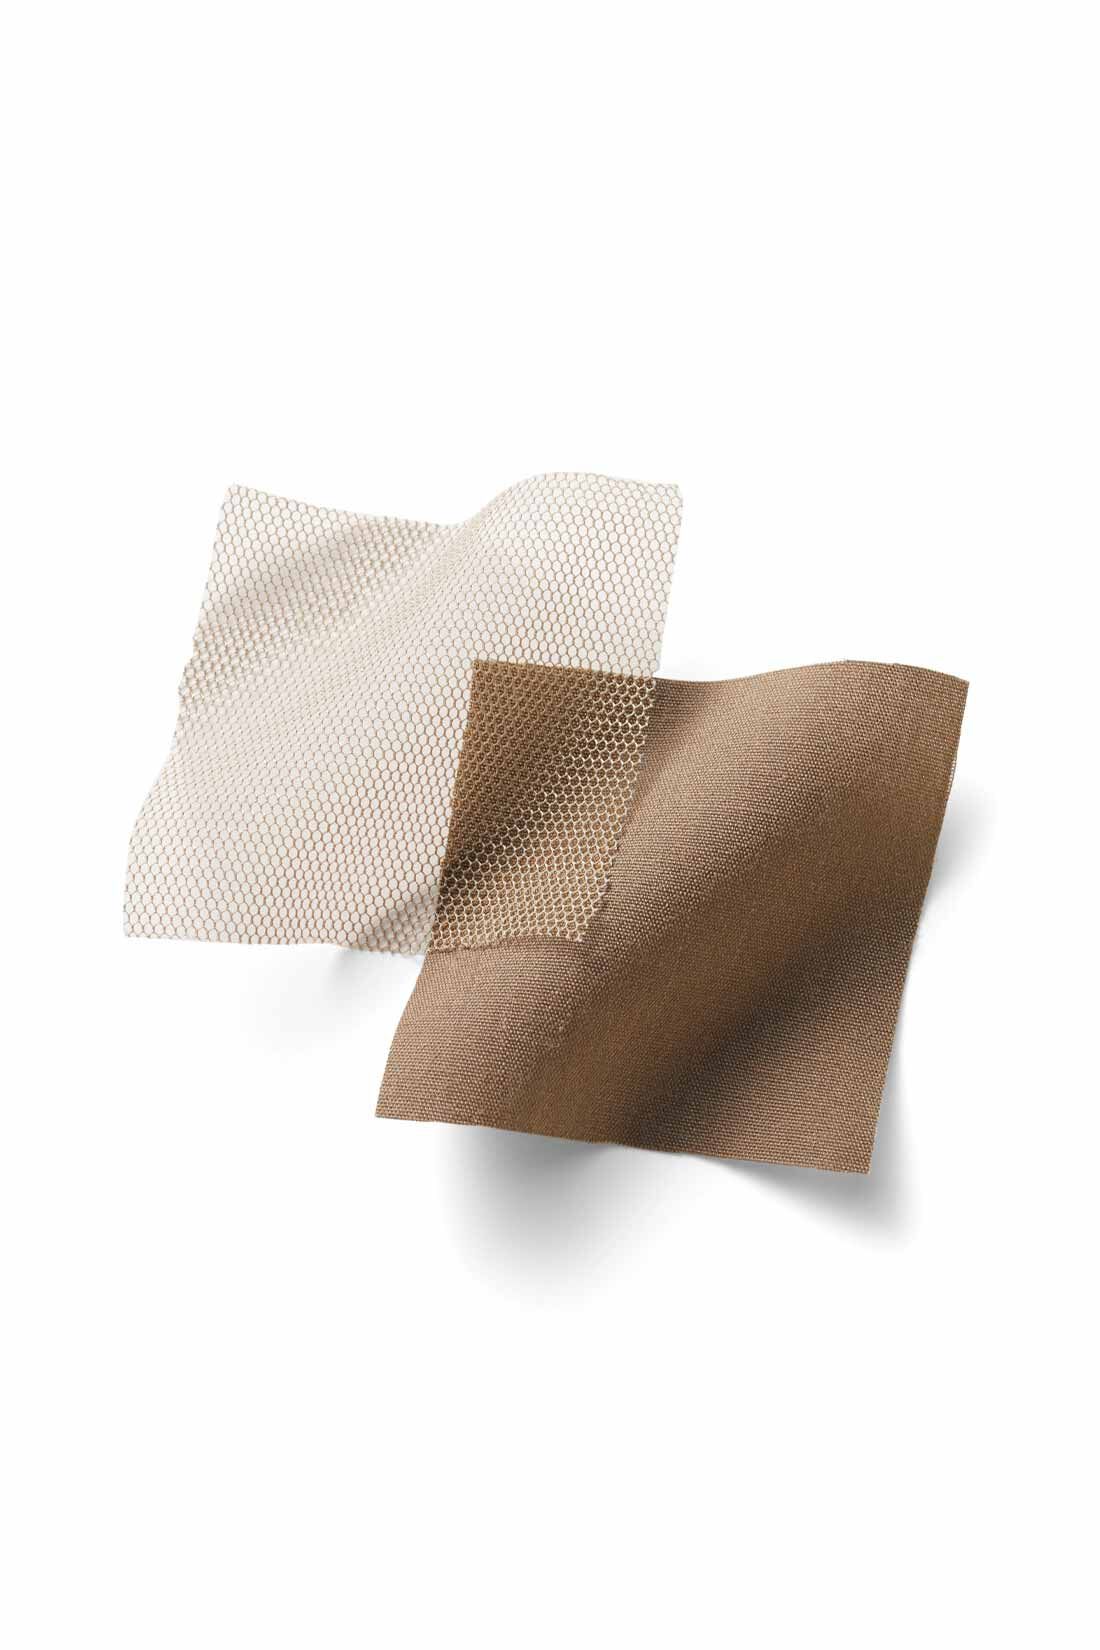 DRECO by IEDIT|【3～10日でお届け】IEDIT[イディット]　プリーツデザインのチュールレイヤードスカート〈モカグレー〉|きれいな透け感のあるチュール素材と、プリーツ加工をほどこした布はくの2枚仕立て。